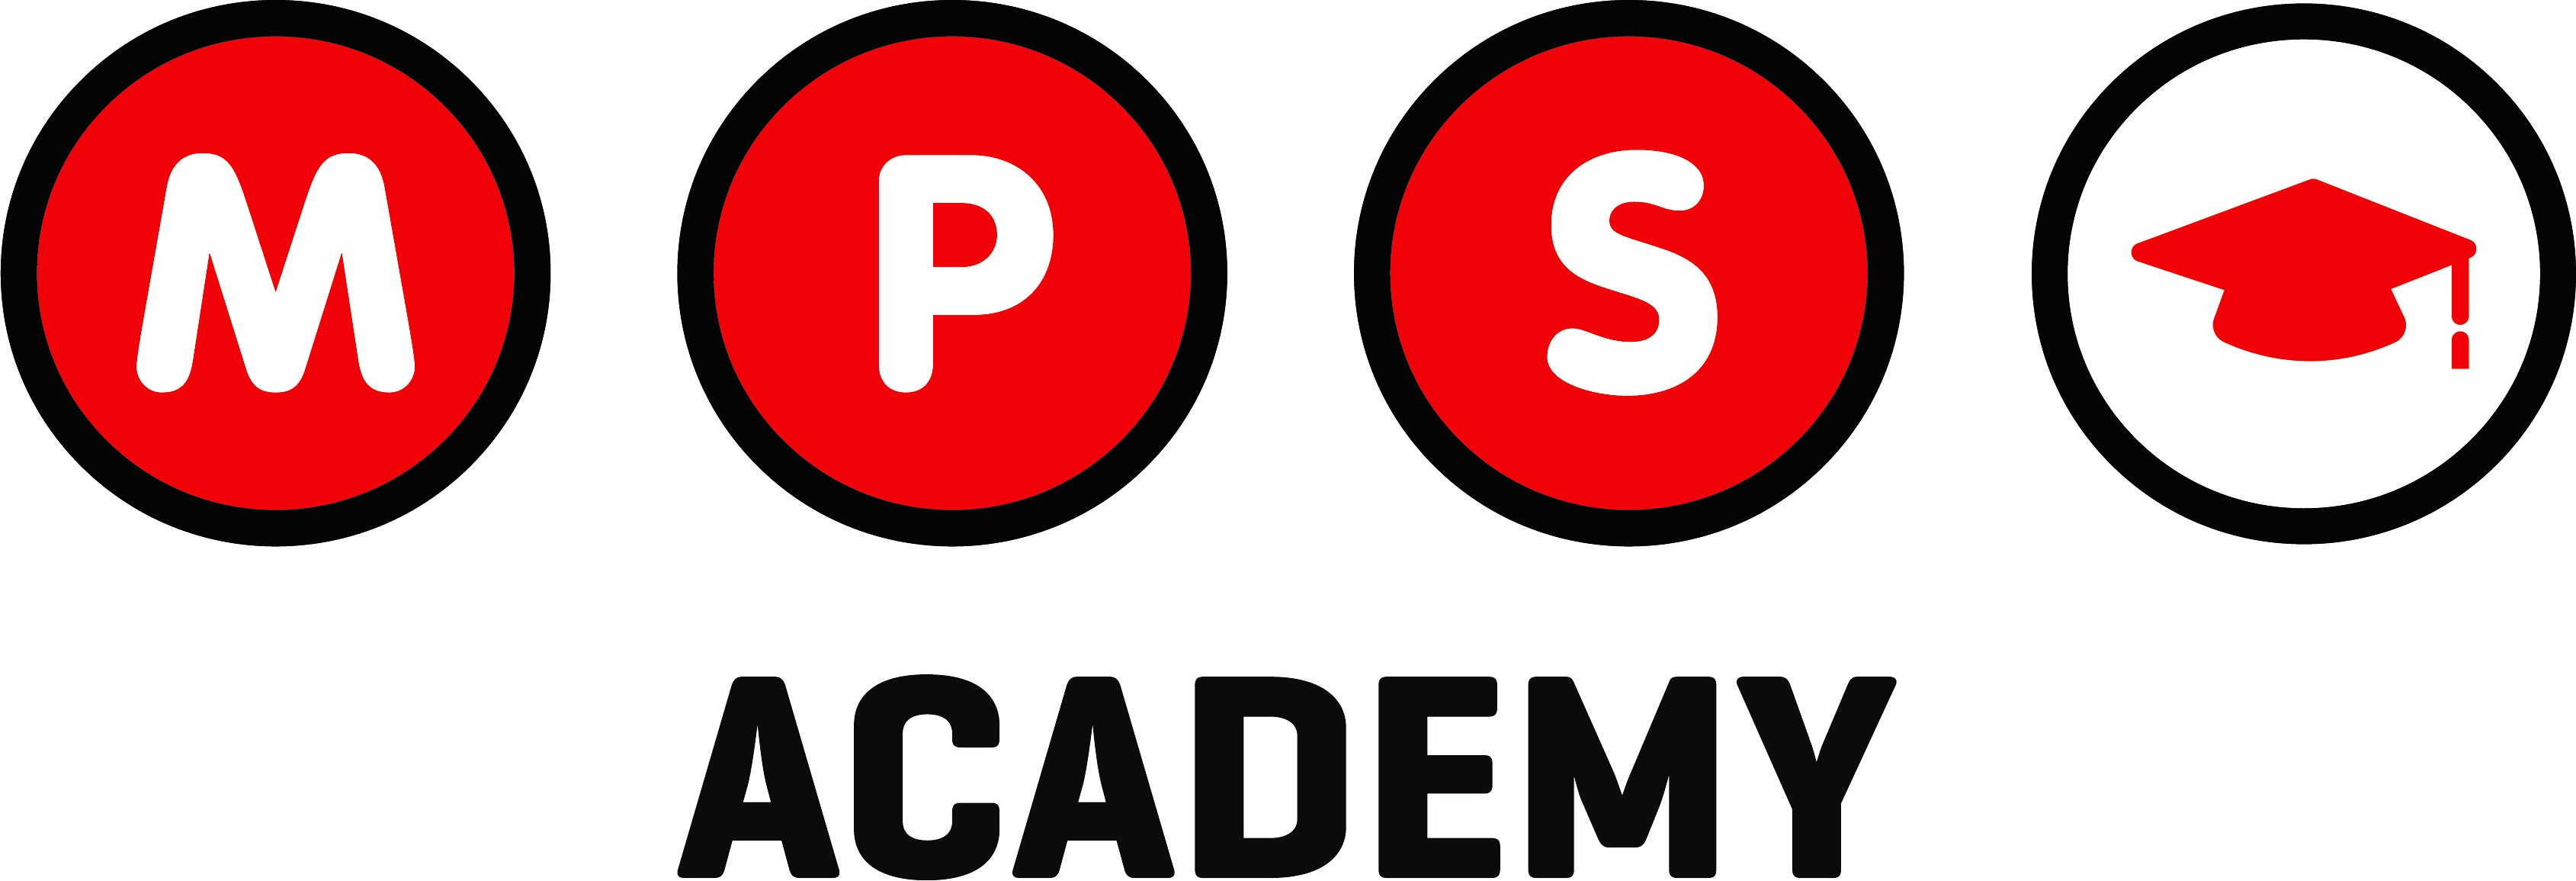 MPS academy logo-1